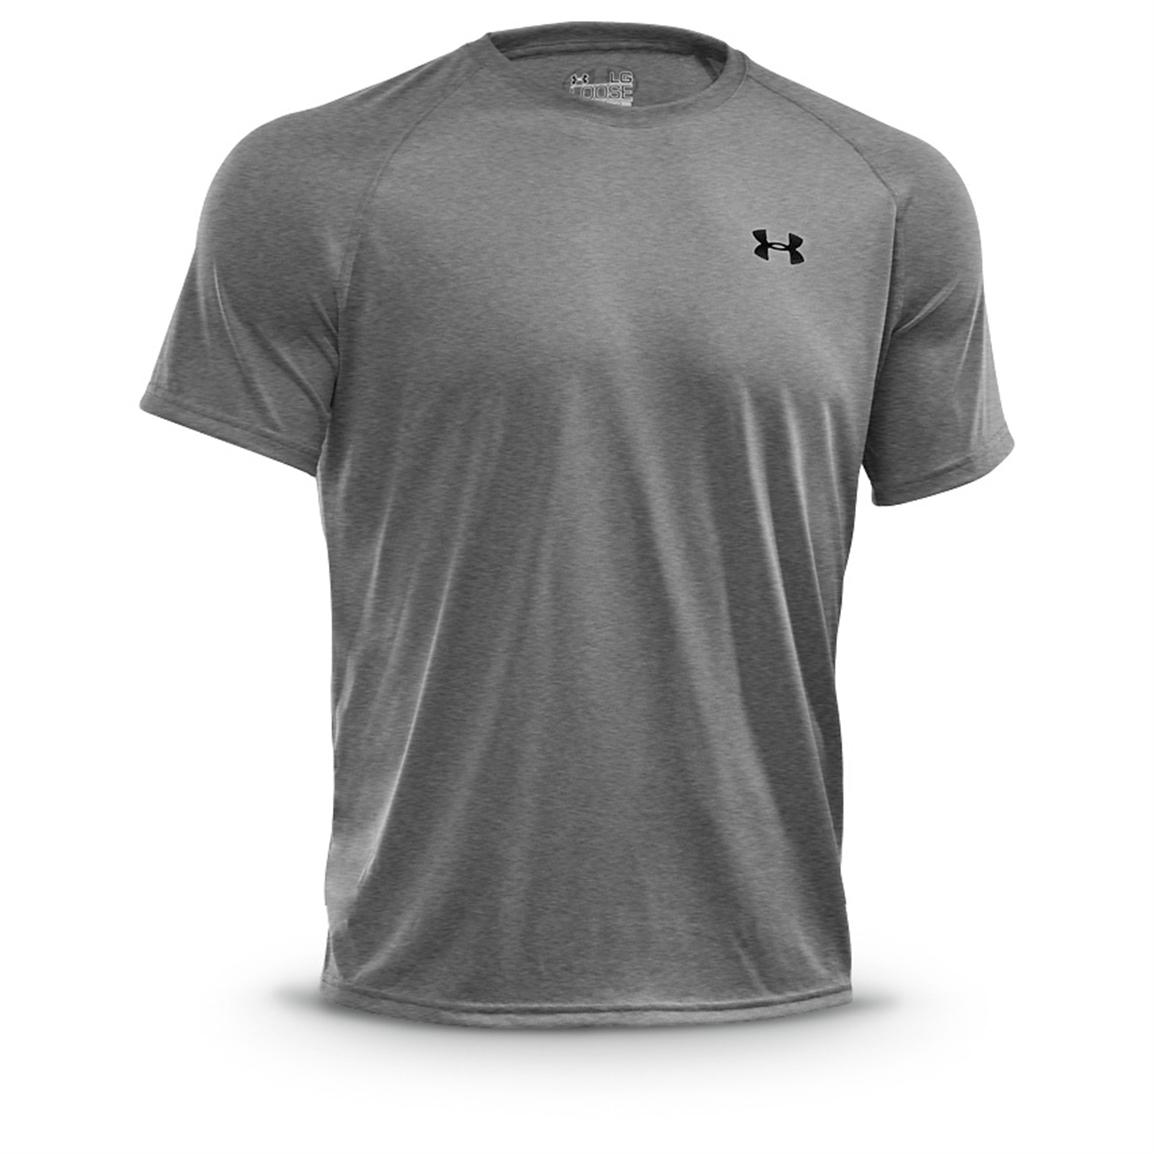 gray under armour shirt